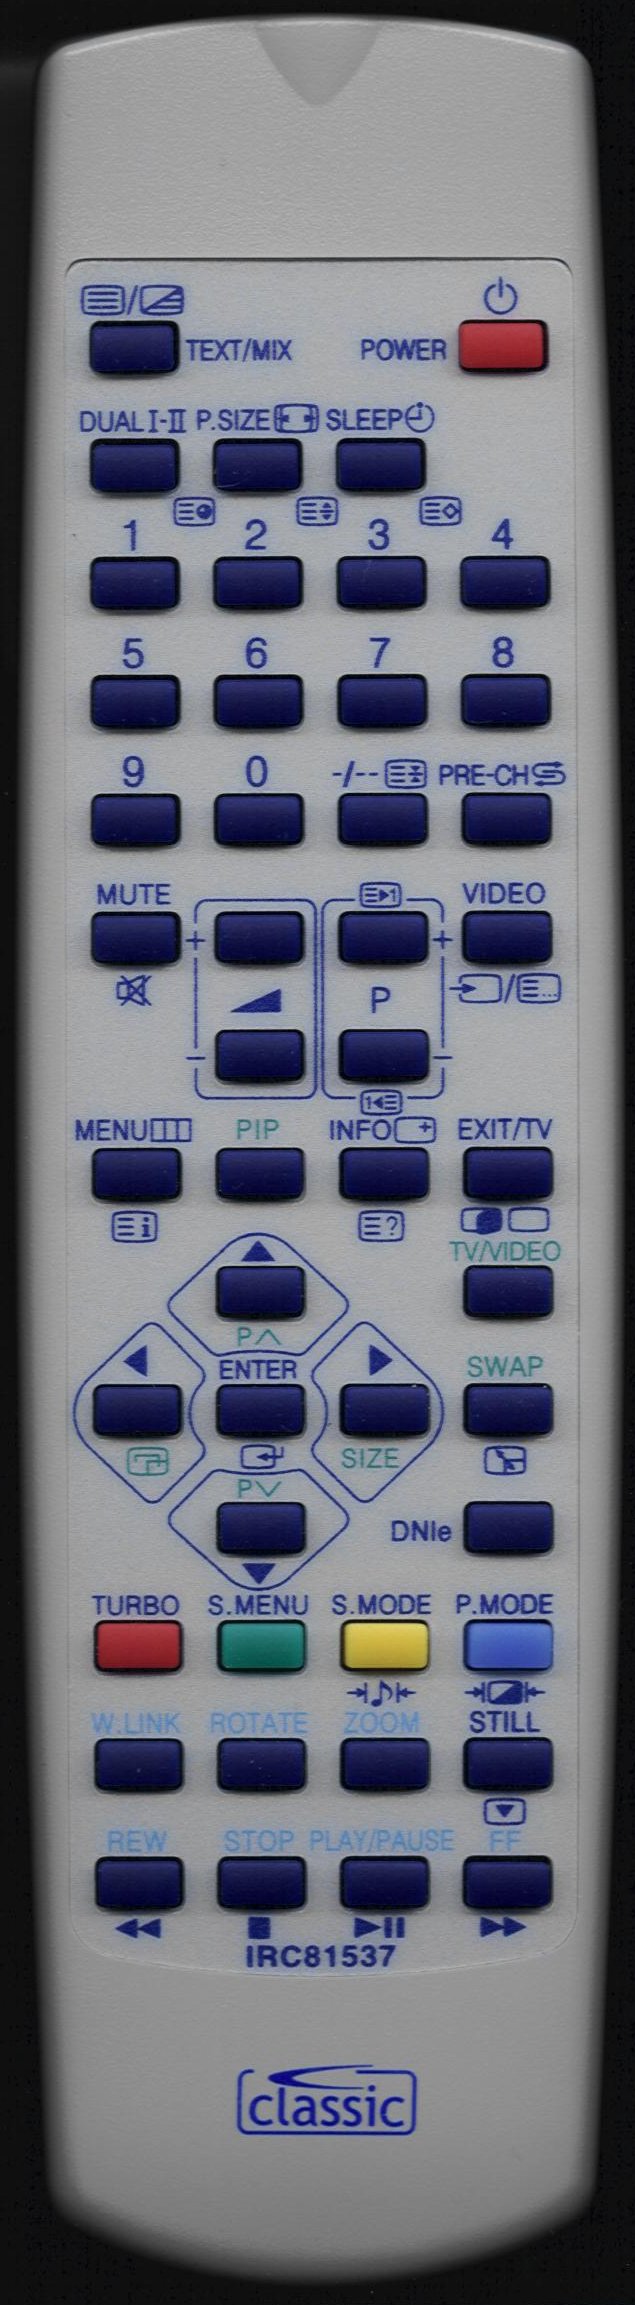 SAMSUNG - AA5900357 Remote Control Alternative